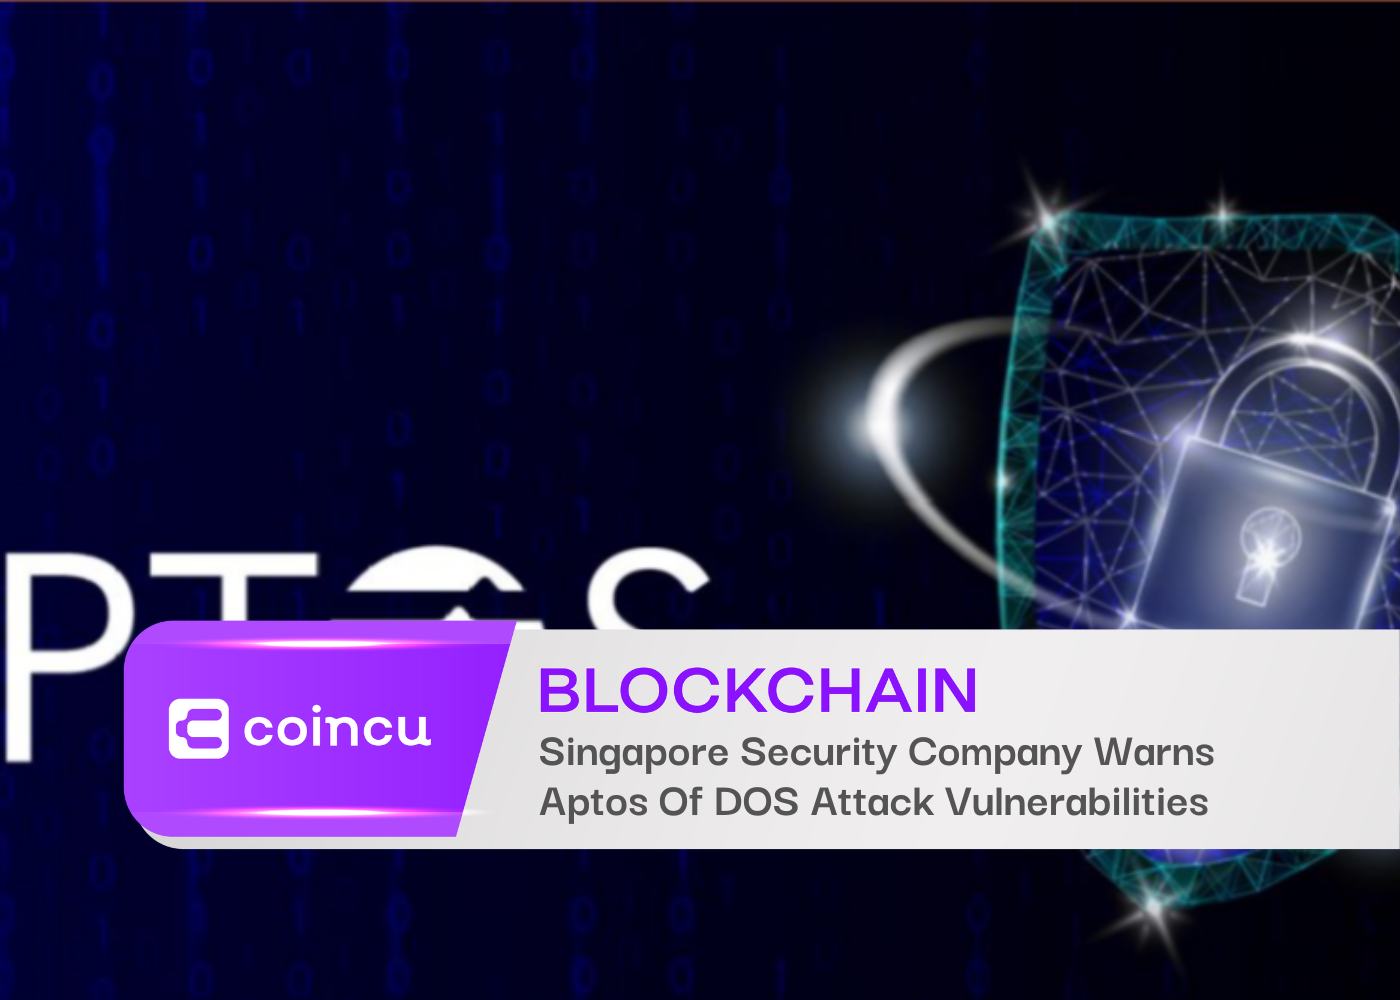 Singapore Security Company Warns Aptos Of DOS Attack Vulnerabilities